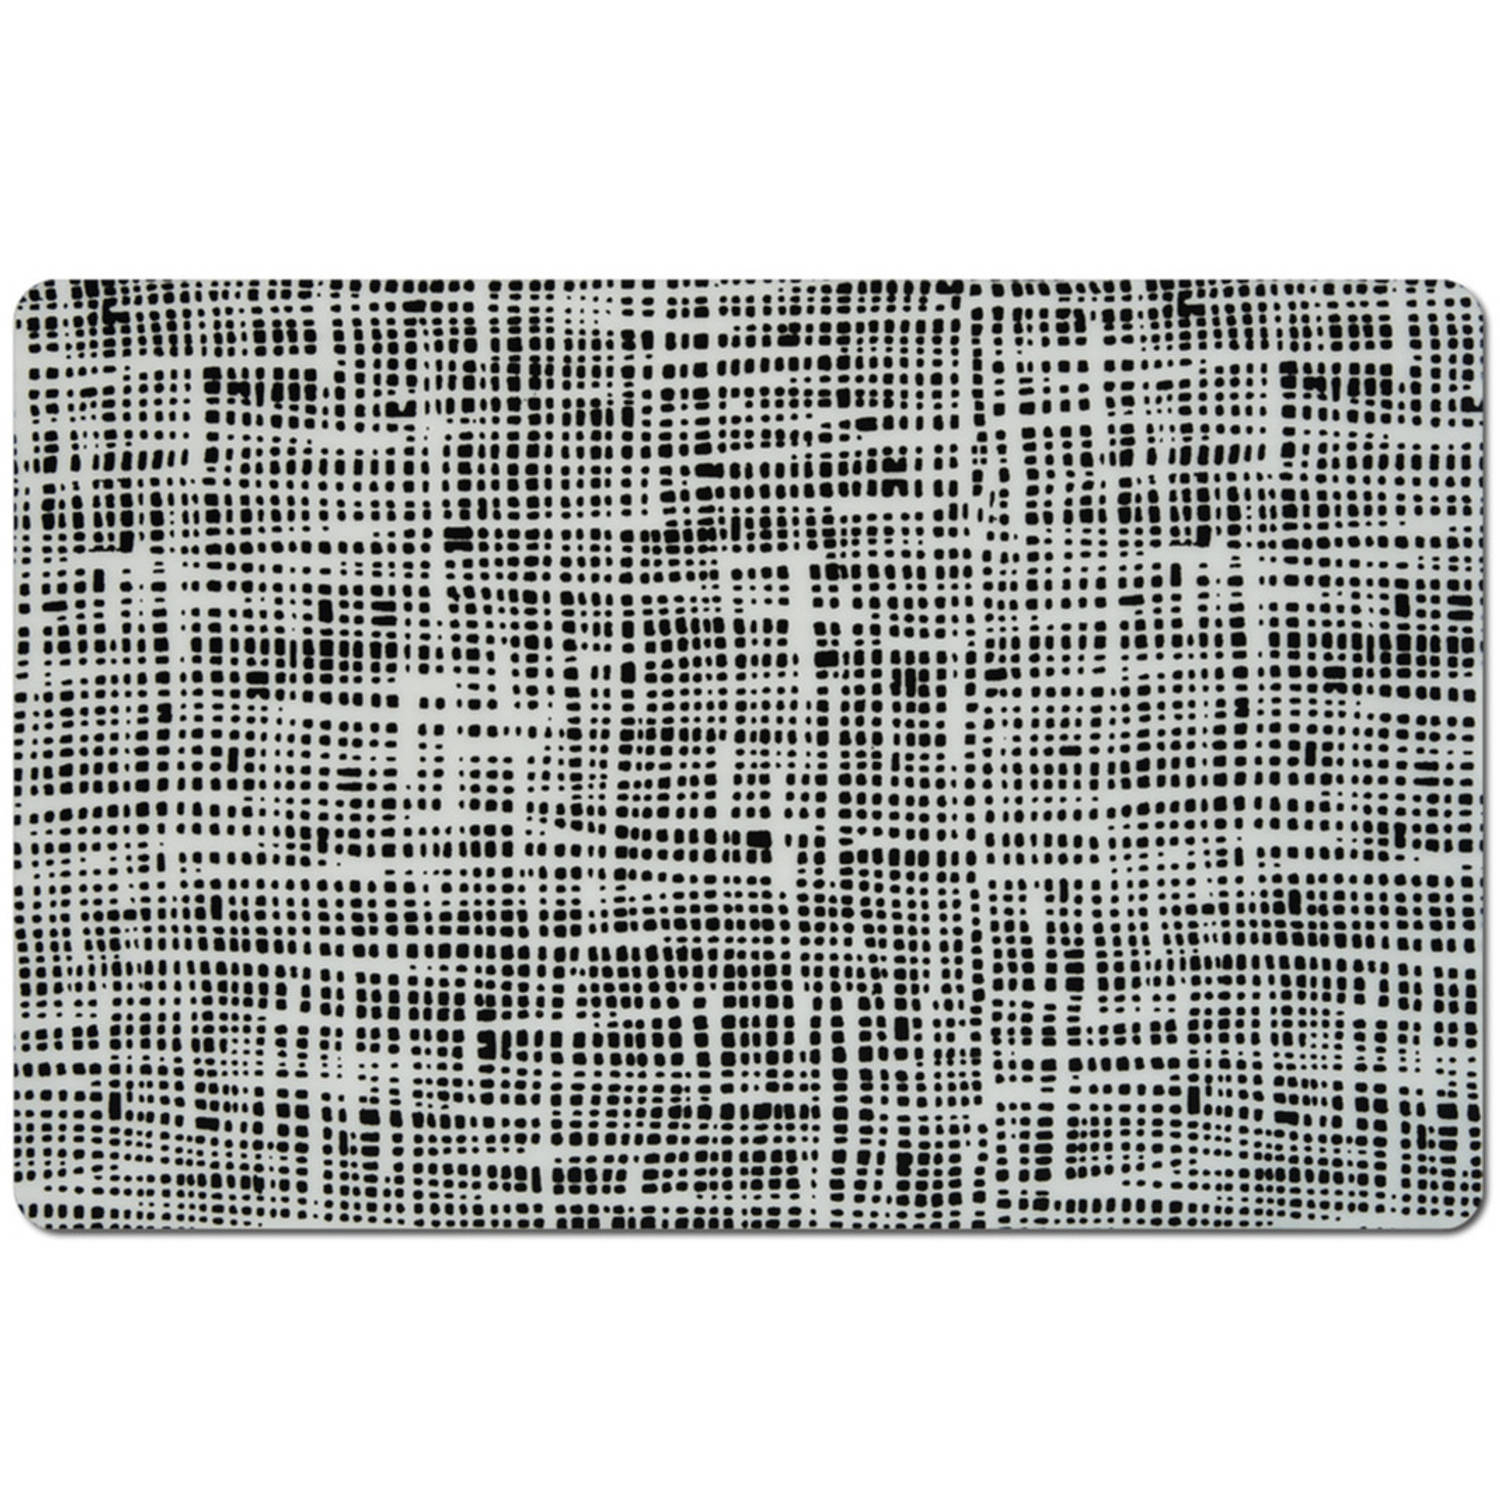 Zeller placemats abstract - 1x - zwart - 44 x 29 cm - kunststof - Placemats